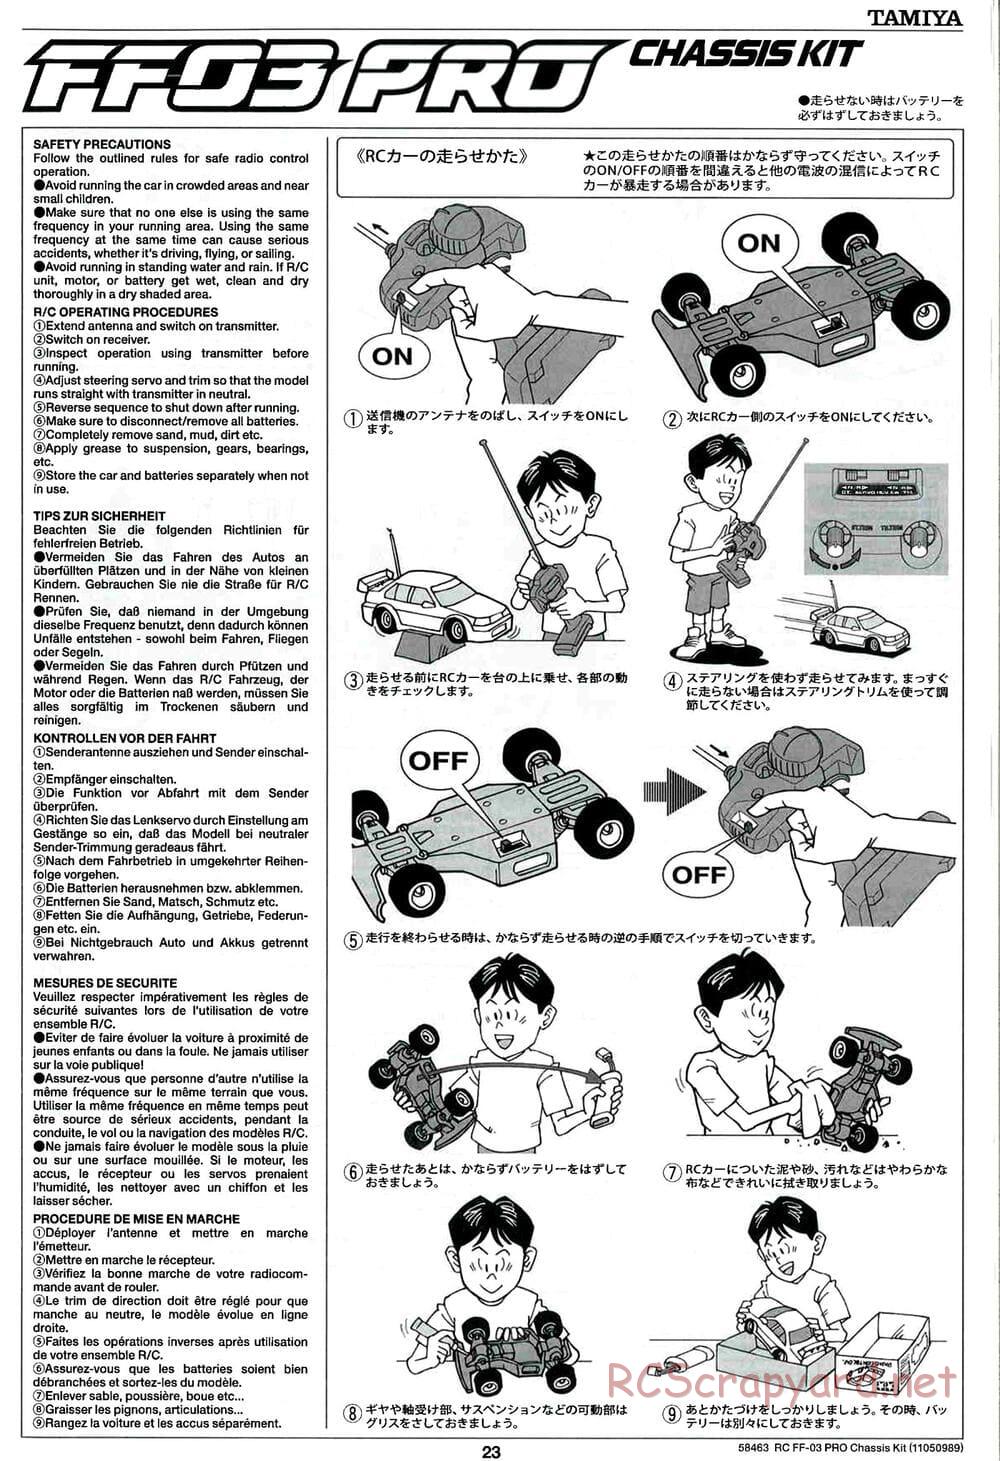 Tamiya - FF-03 Pro Chassis - Manual - Page 23